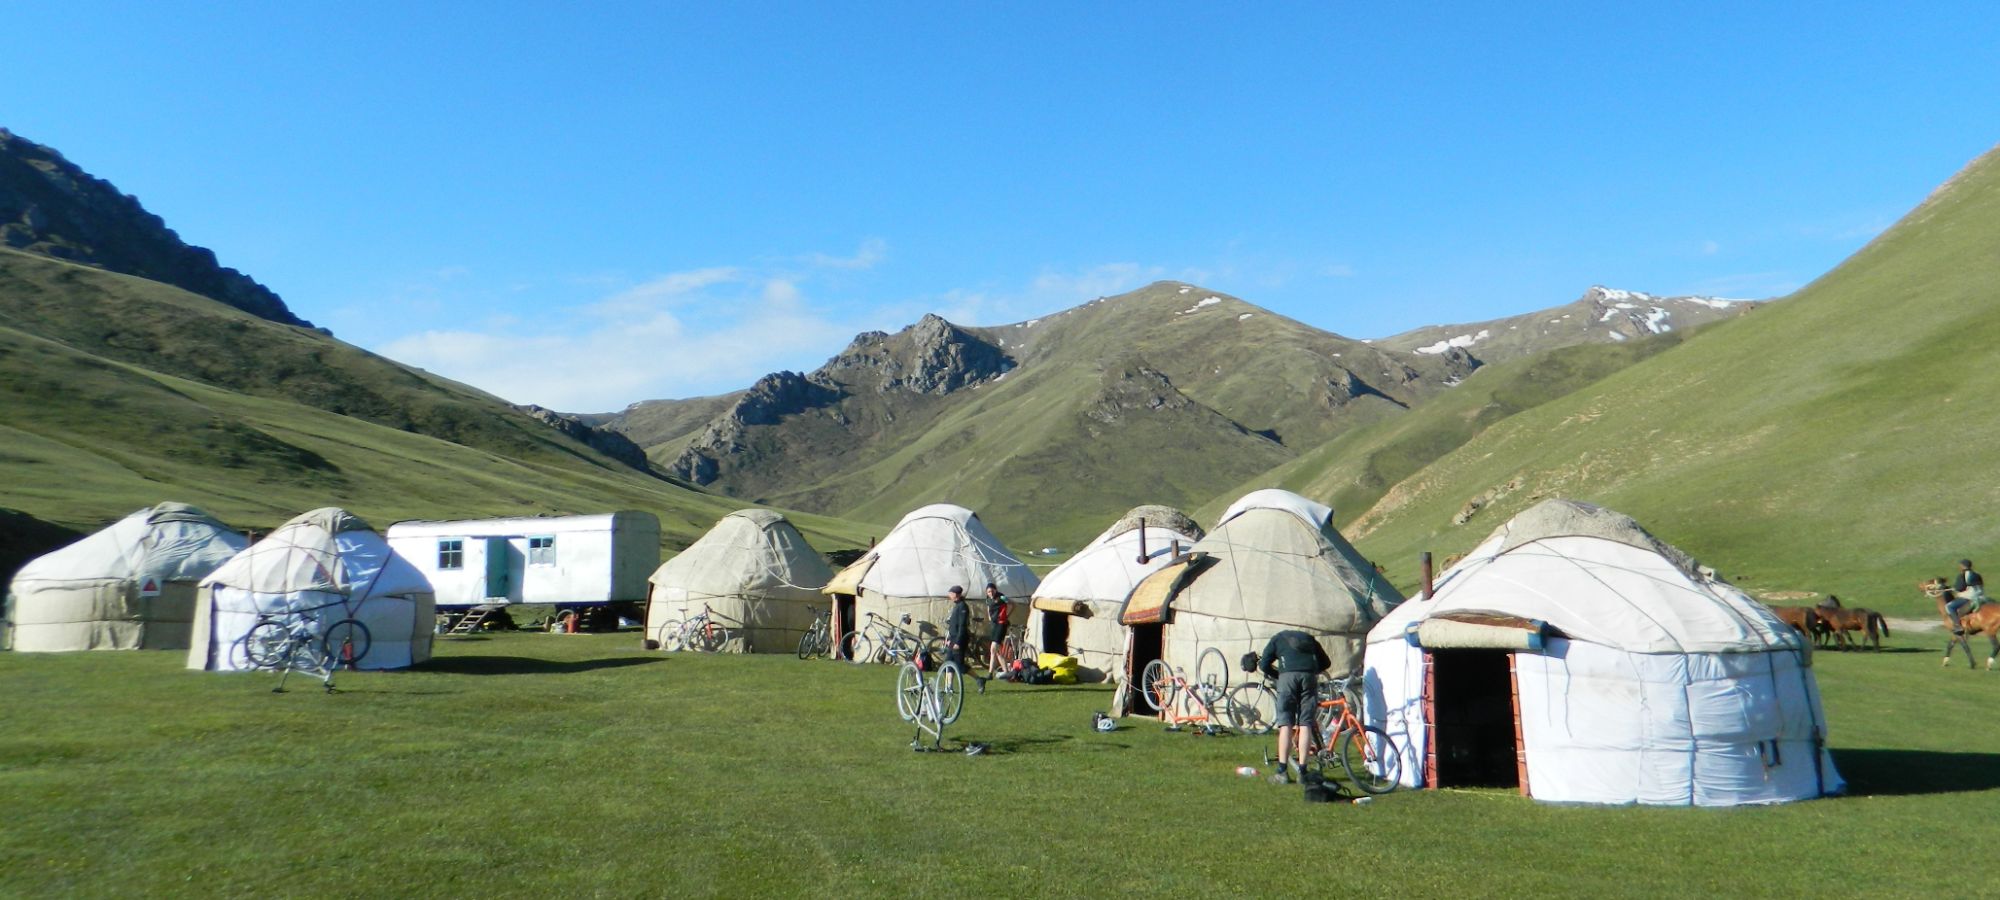 Tash Rabat Yurt Camp - Kyrgyzstan